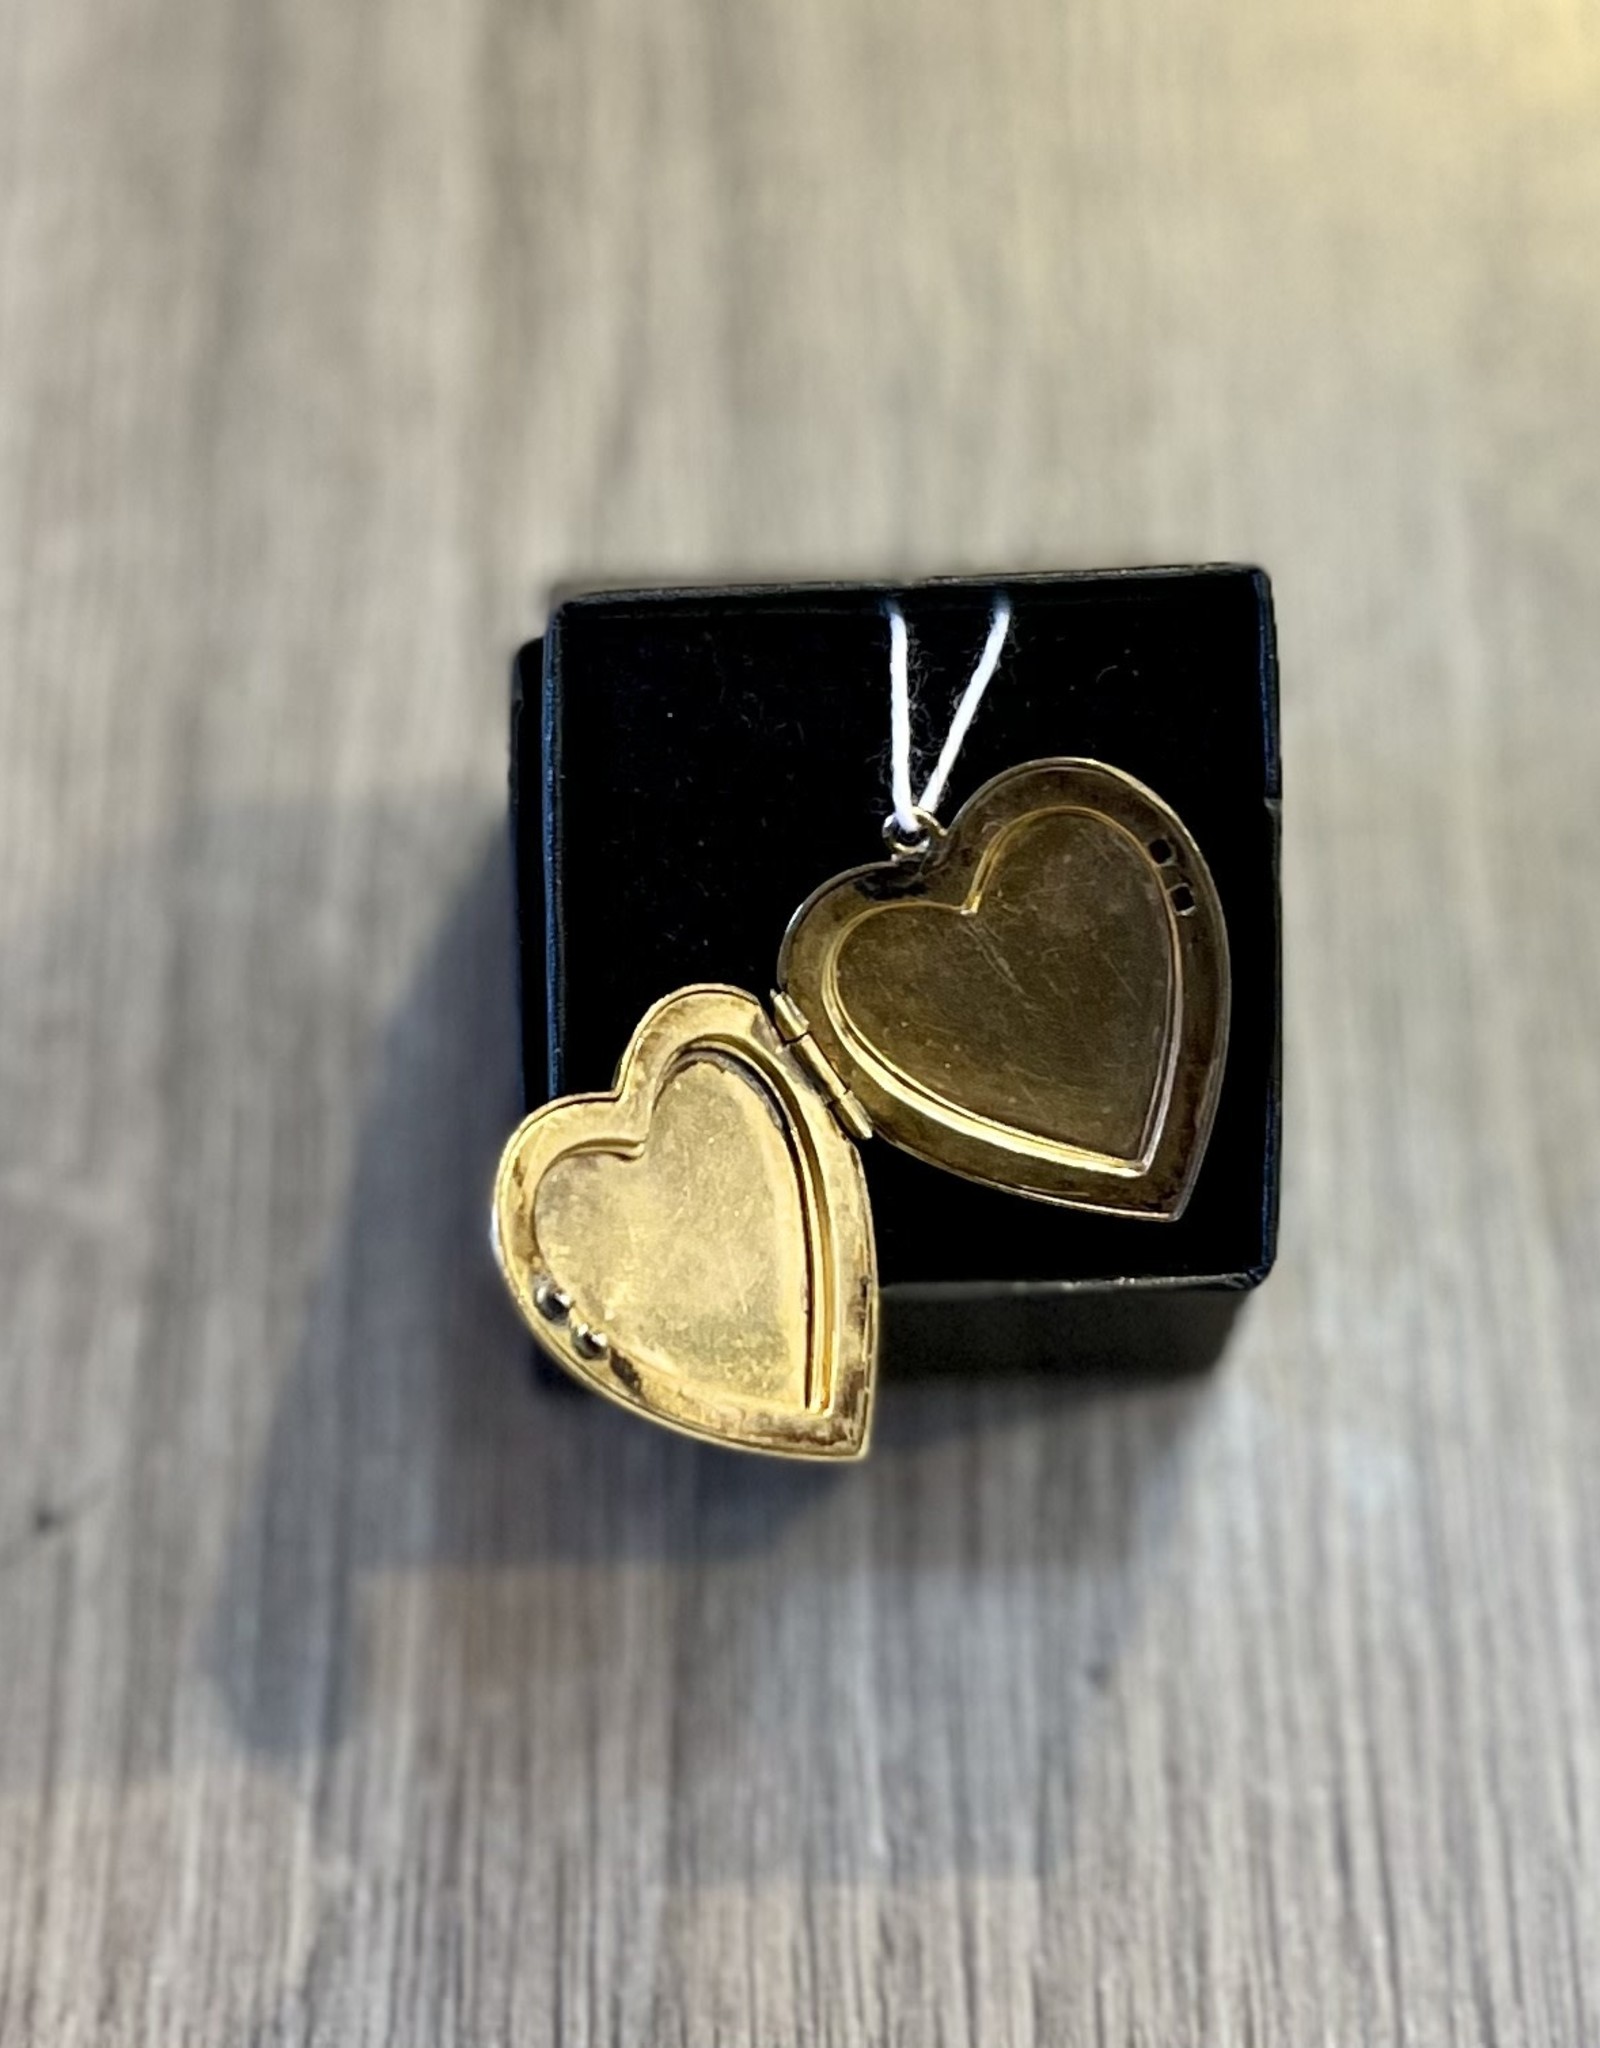 Jewelry - Vintage 10ct Gold Heart Locket